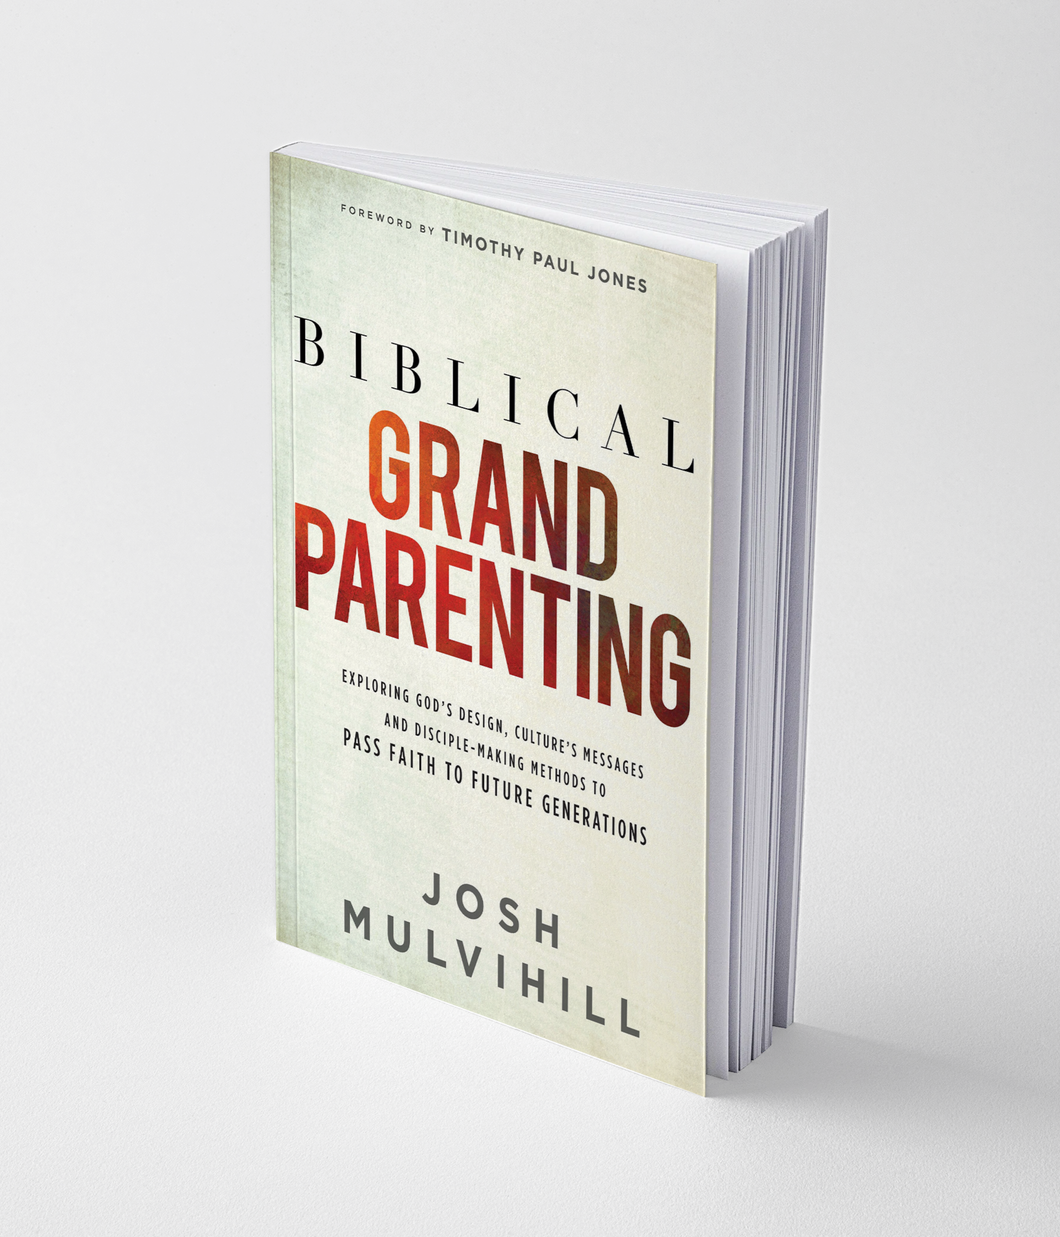 Biblical Grand Parenting- Exploring God's Design